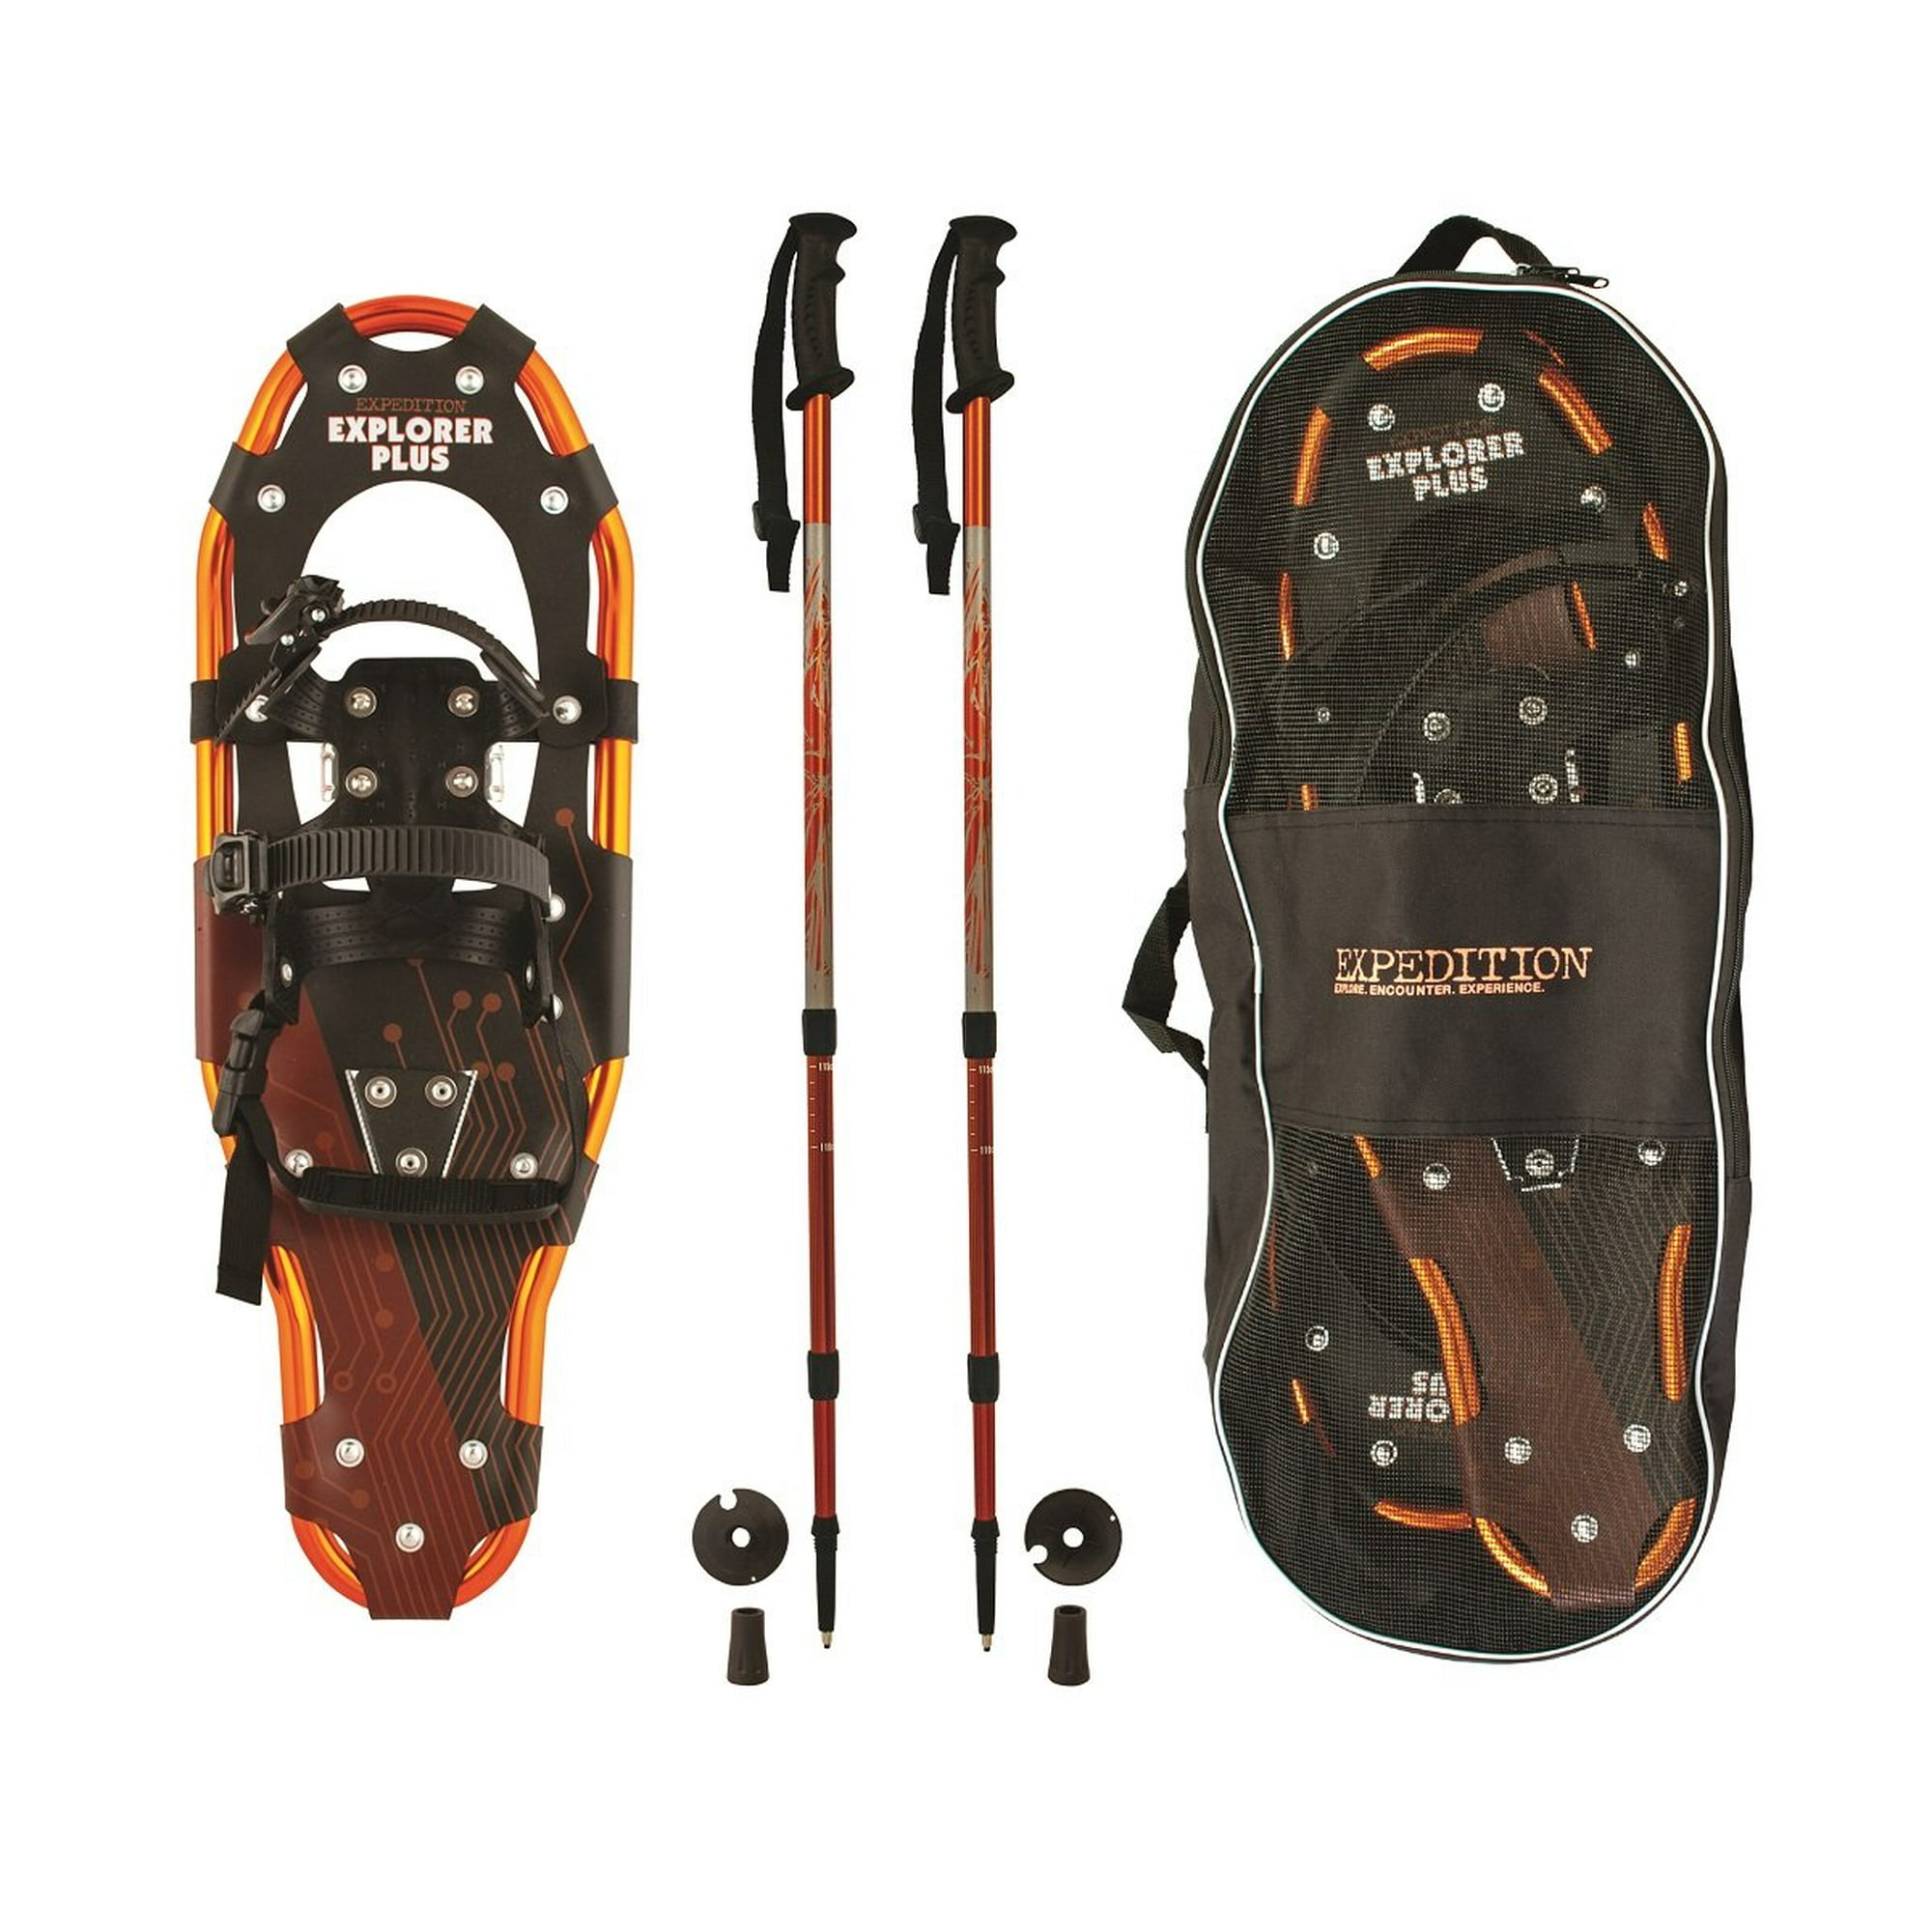 Expedition Outdoors Explorer Plus Snowshoes Kit (Aluminum Snowshoes w/ Trekking Poles) $14.71 + Free S&H w/ Walmart+ or $35+